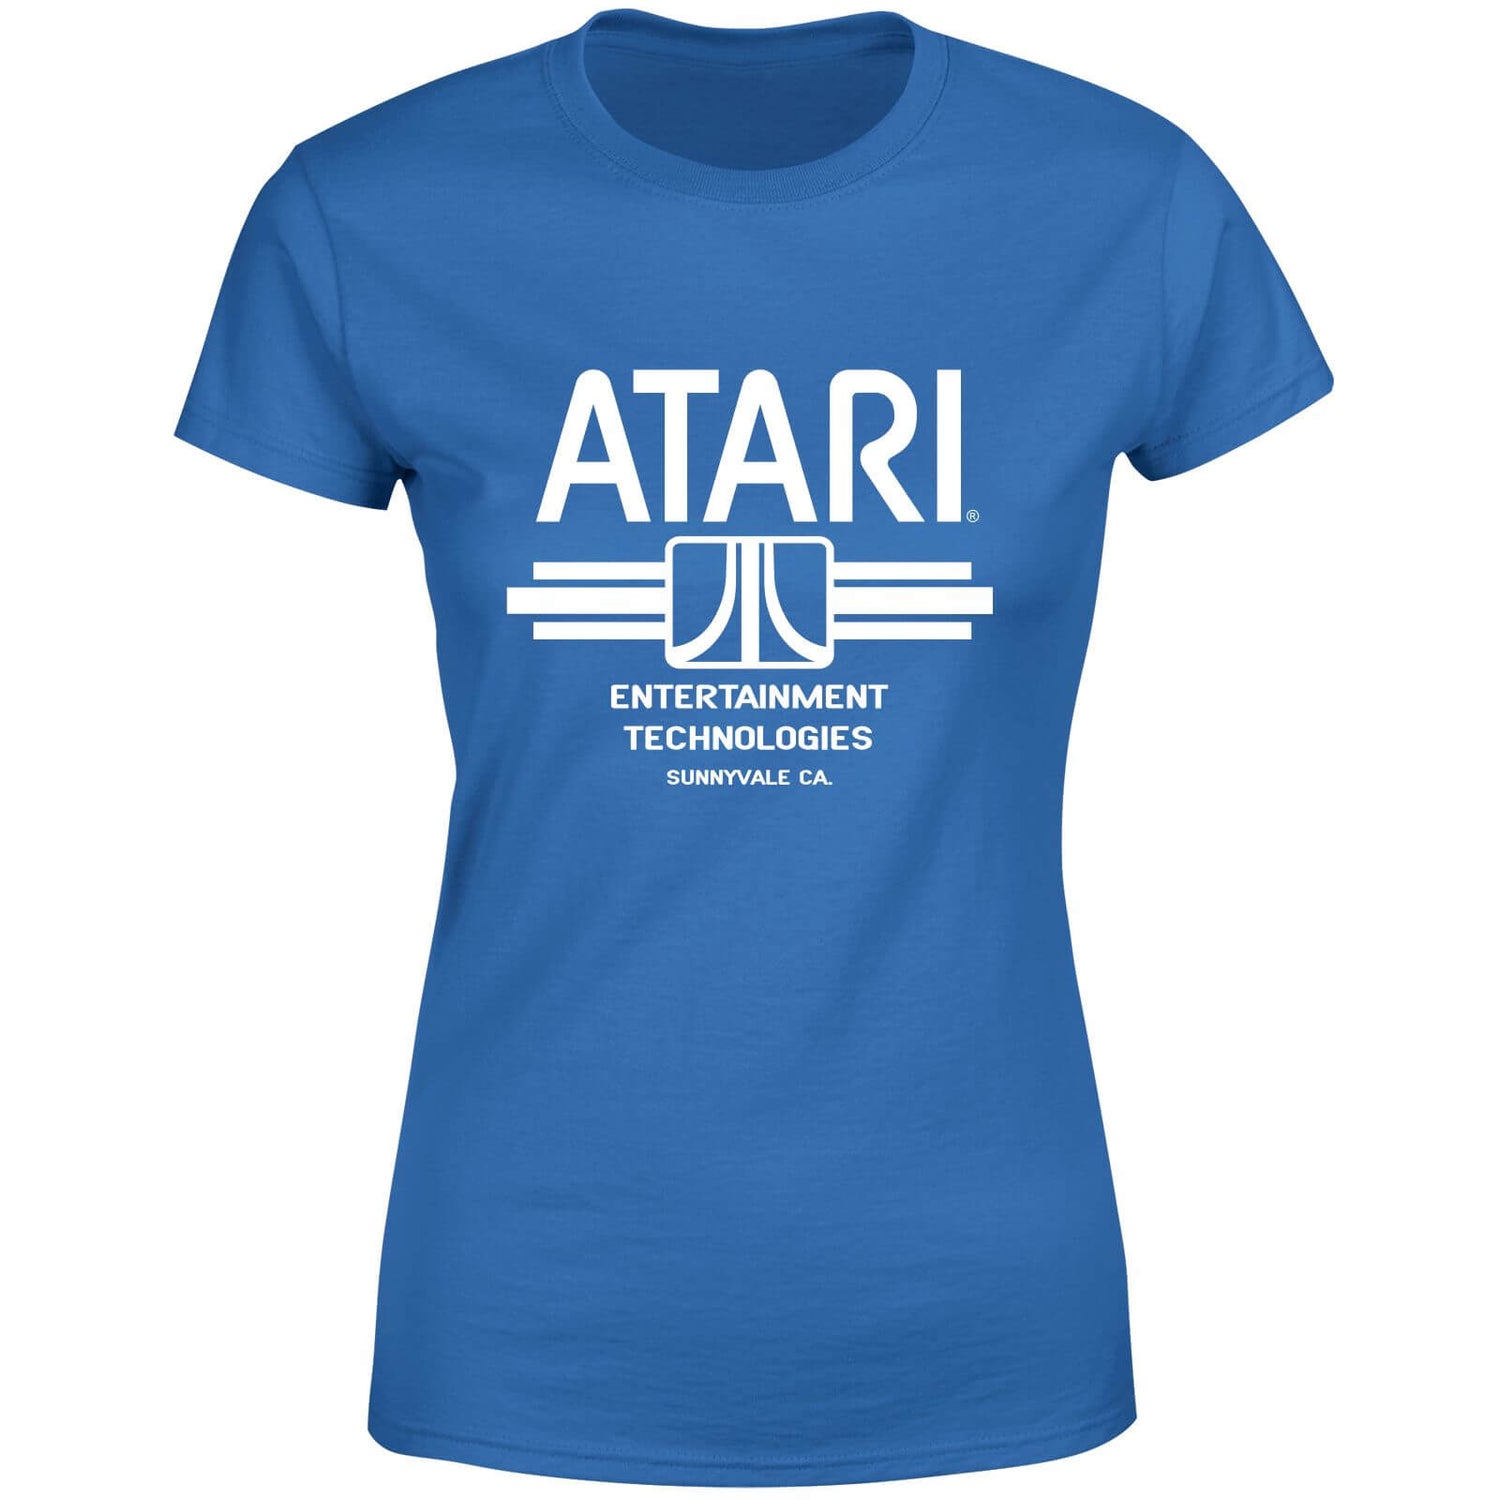 Atari Ent Tech Women's T-Shirt - Blue